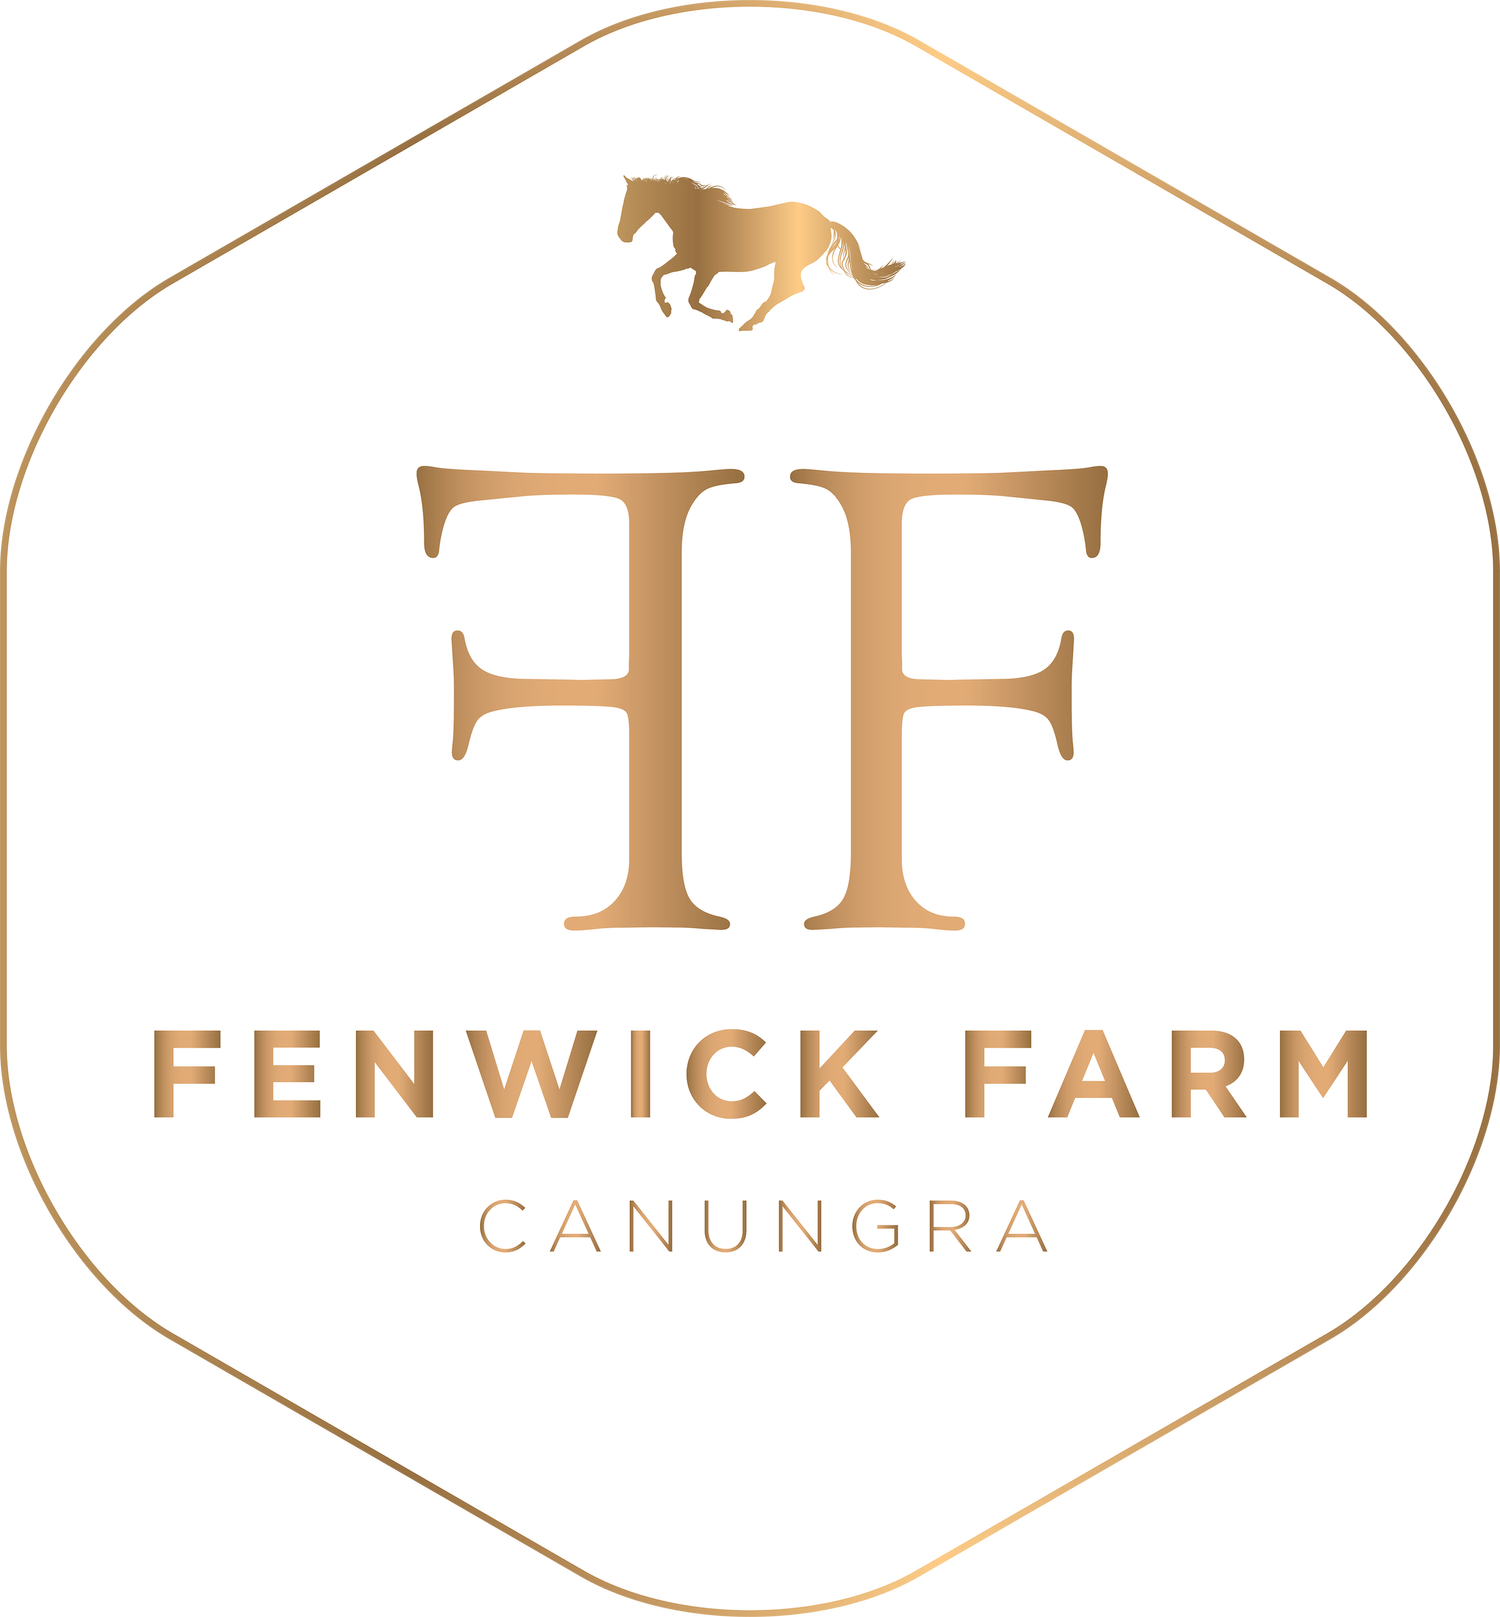 Fenwick Farm